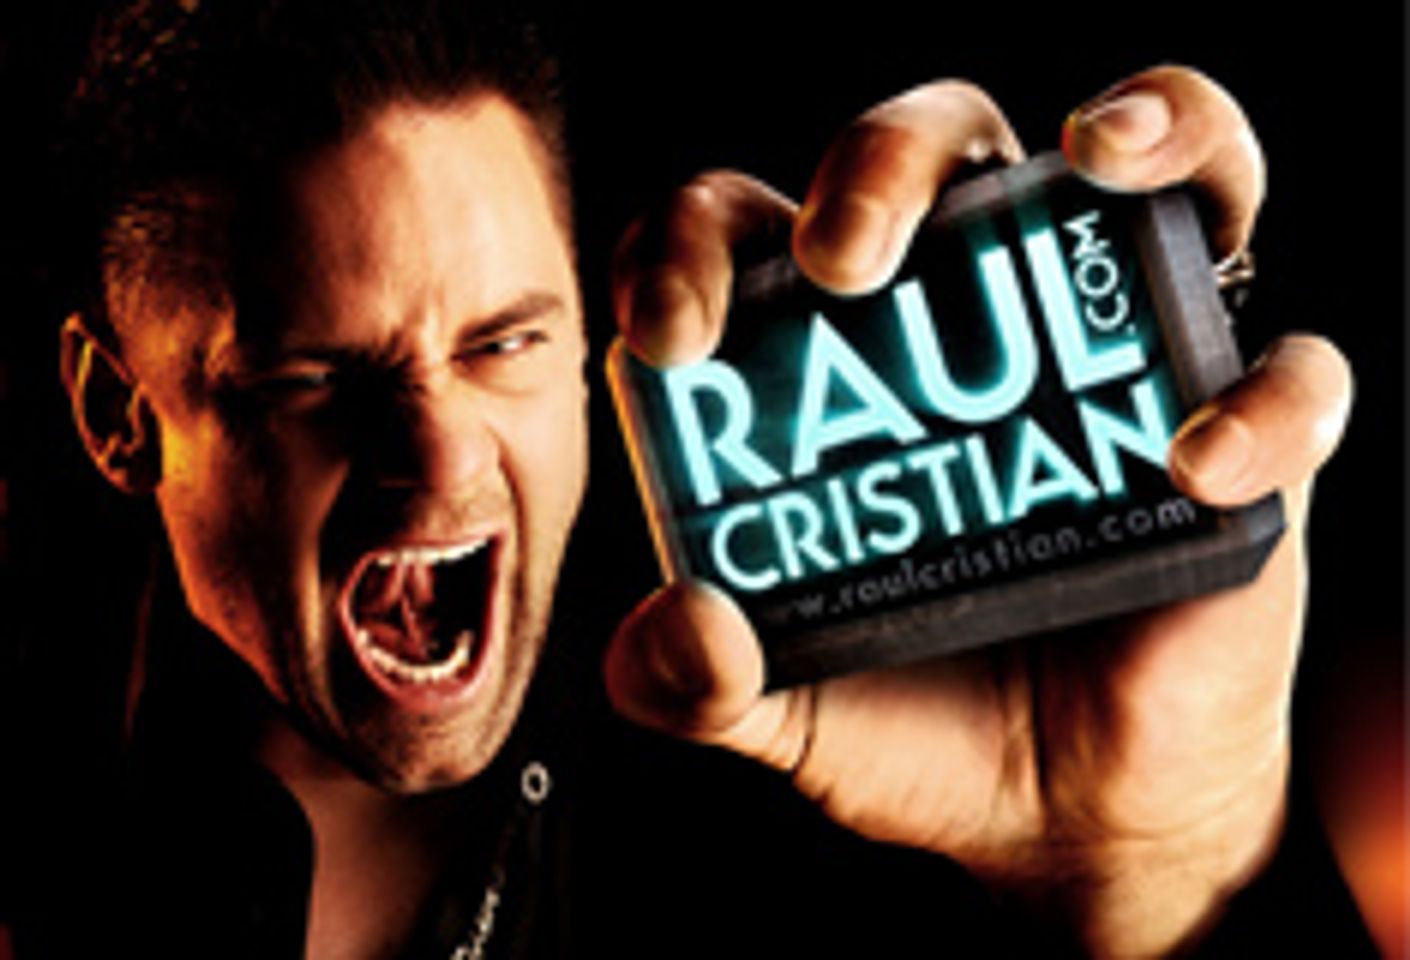 Raul Cristian Test-Drives the American Girl